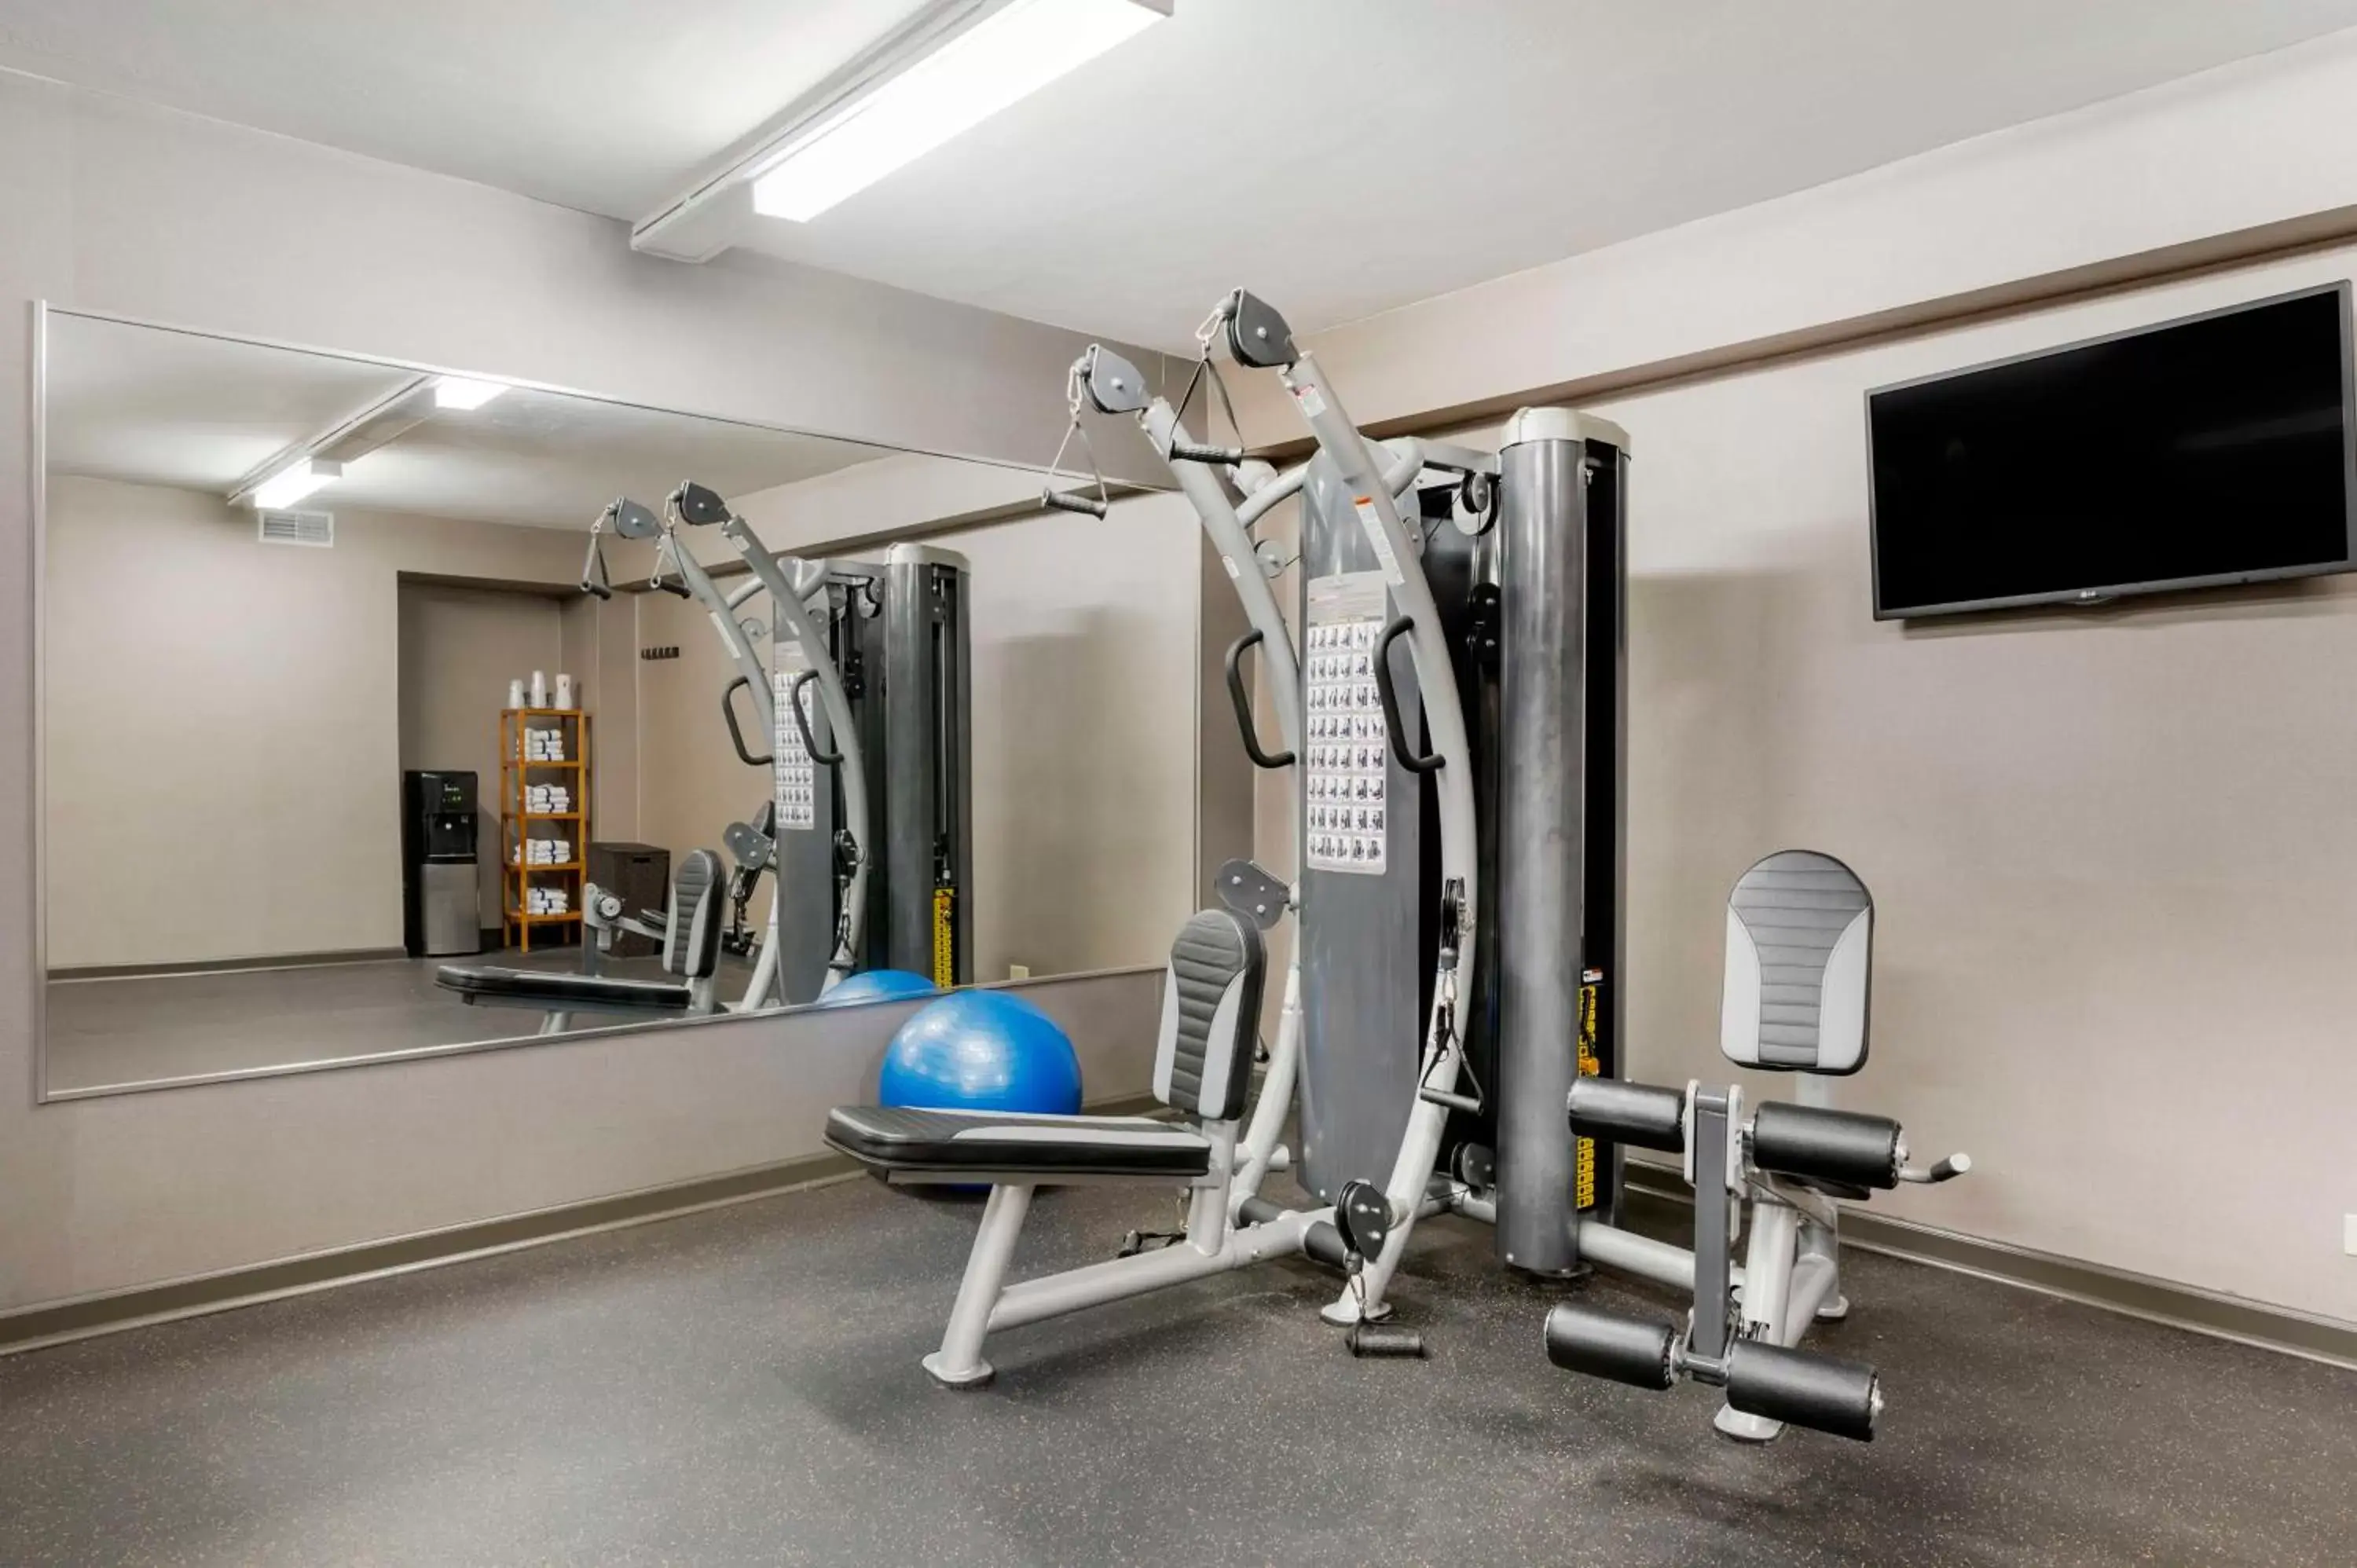 Fitness centre/facilities, Fitness Center/Facilities in Best Western University Inn at Valparaiso